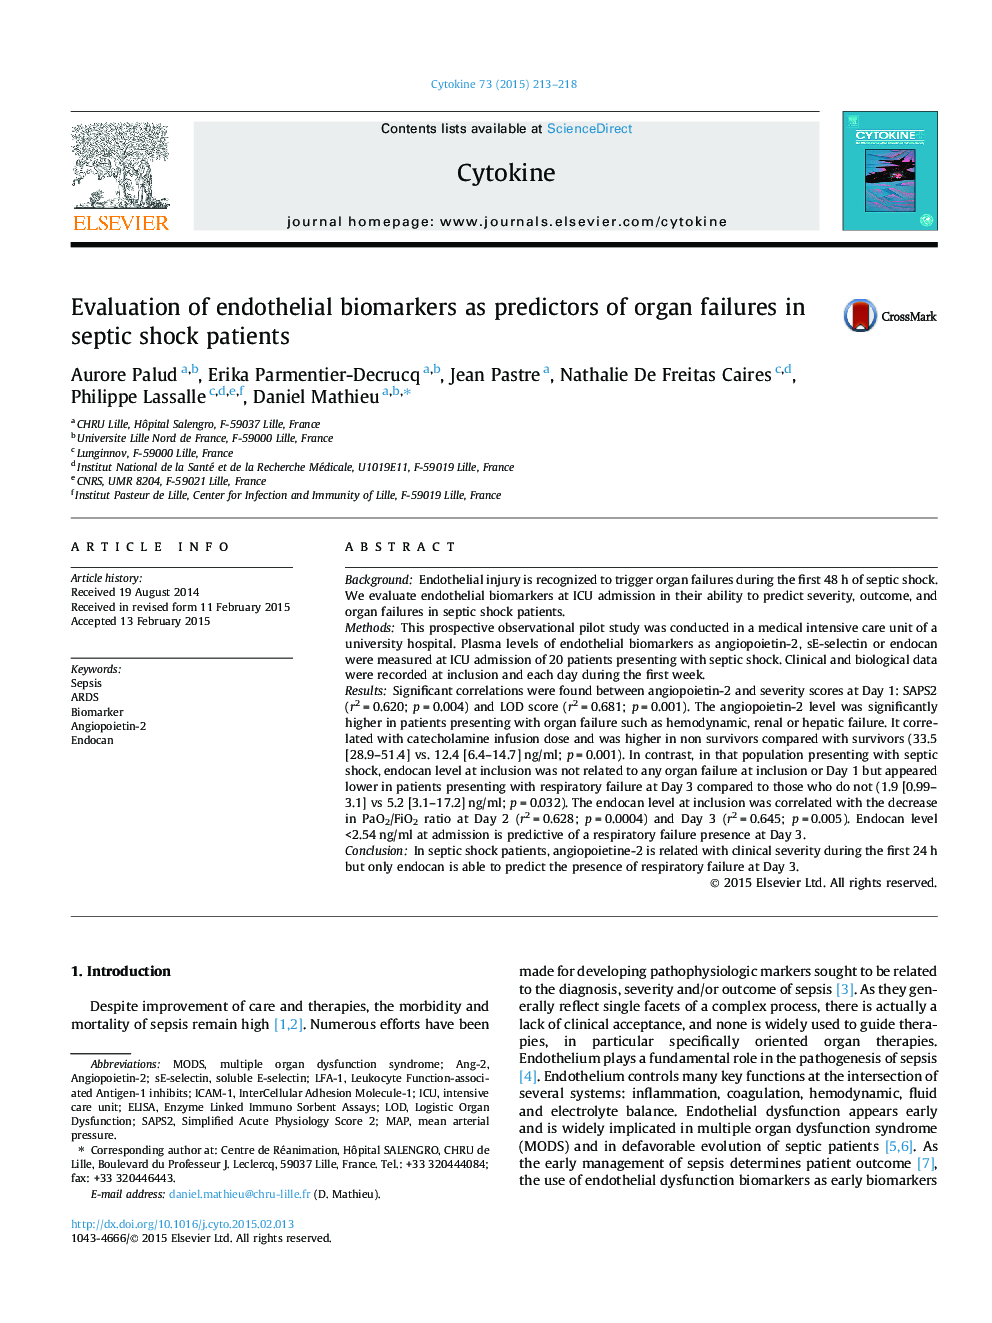 Evaluation of endothelial biomarkers as predictors of organ failures in septic shock patients